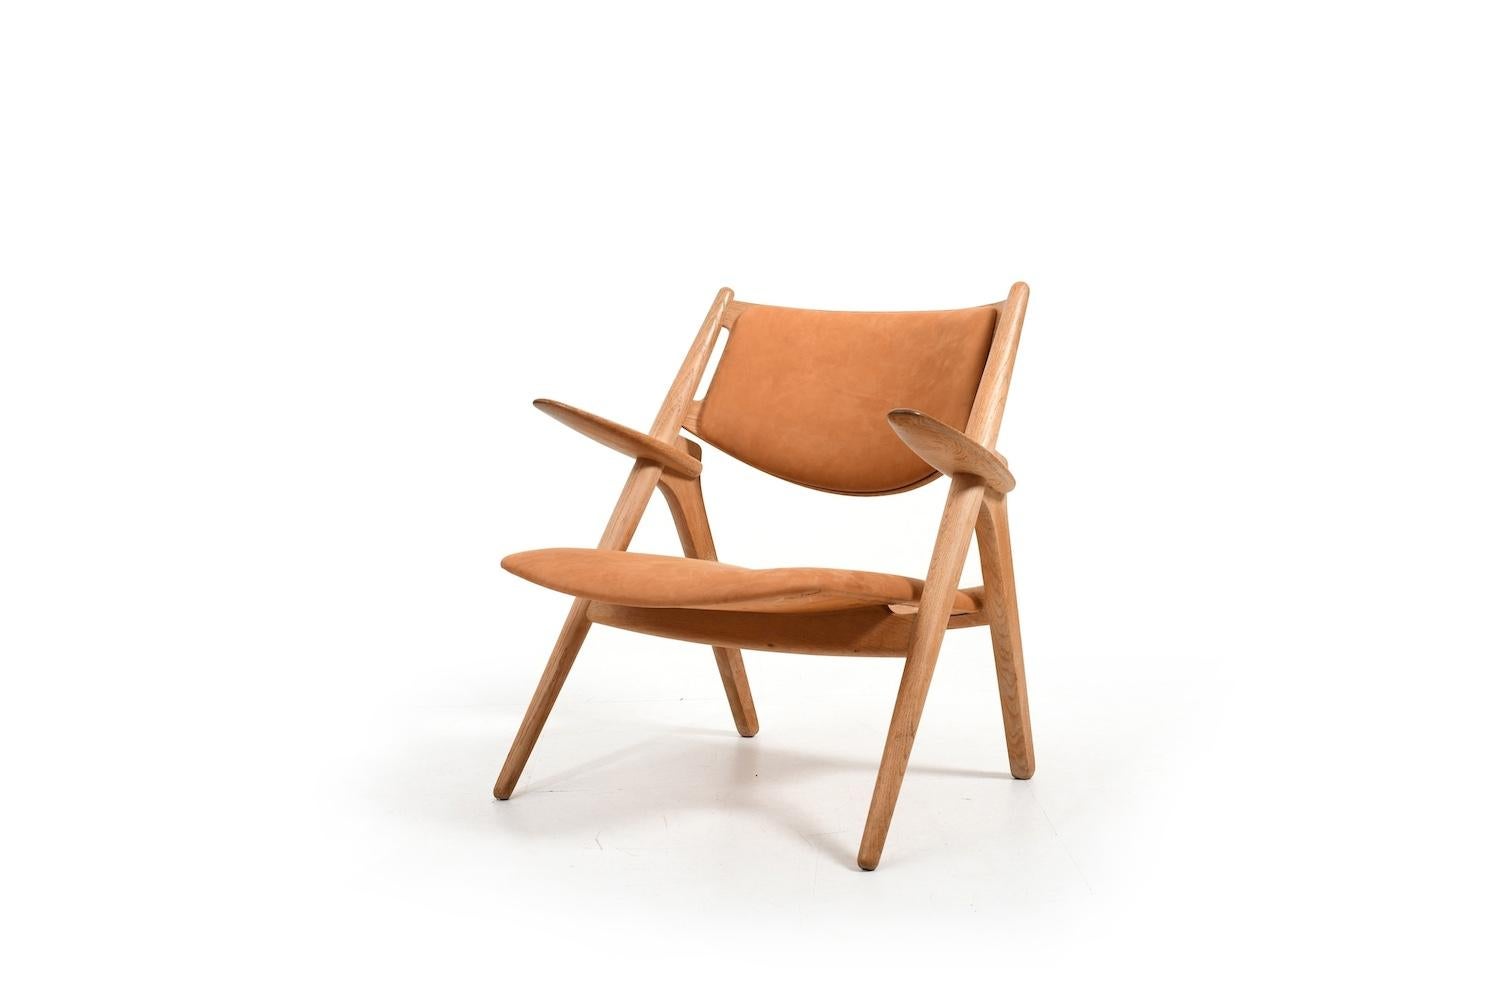 Ch-28 „Sawbuck“ easychair / sawbuck chair  by Hans J. Wegner for Carl Hansen & Søn Denmark 1951. Prod. 1970s in solid oak. New upholstered with cognac leather.